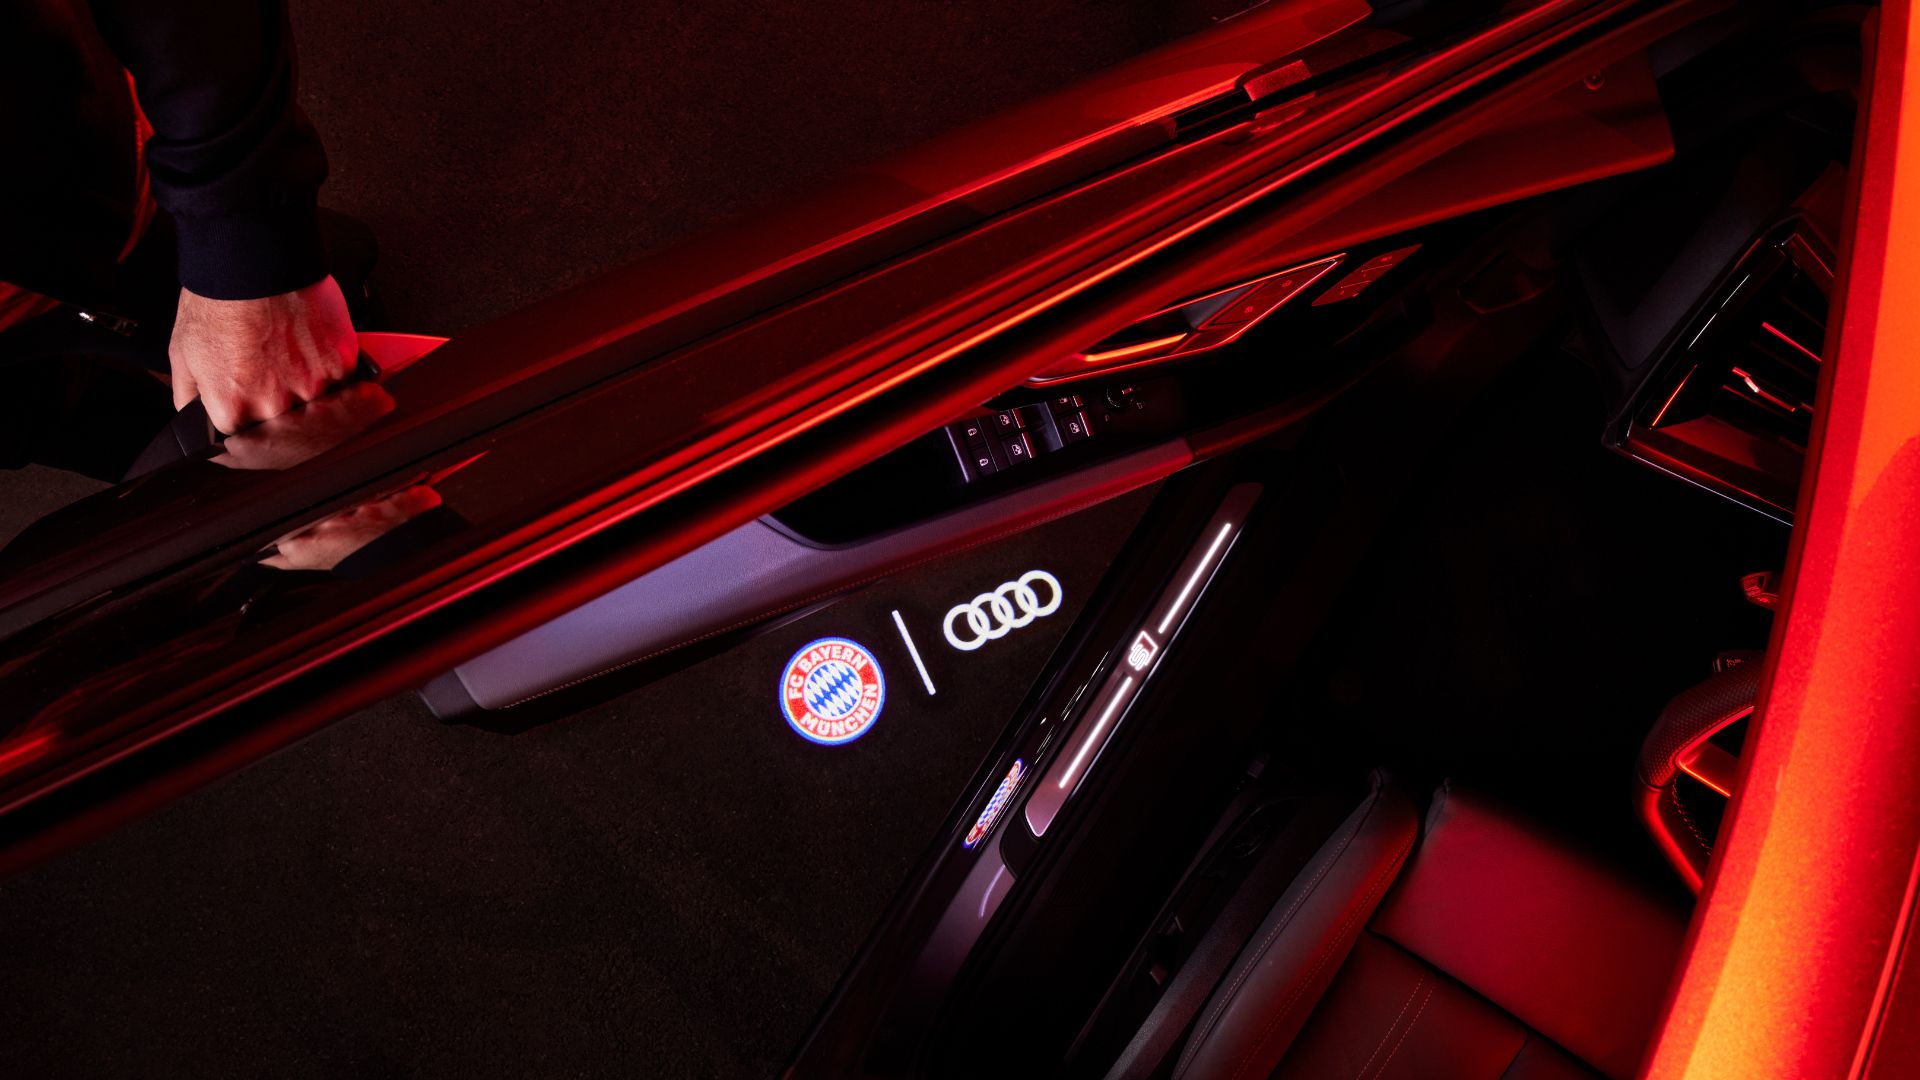 original Audi LED entry lights FC Bayern Munich rings entry lighting